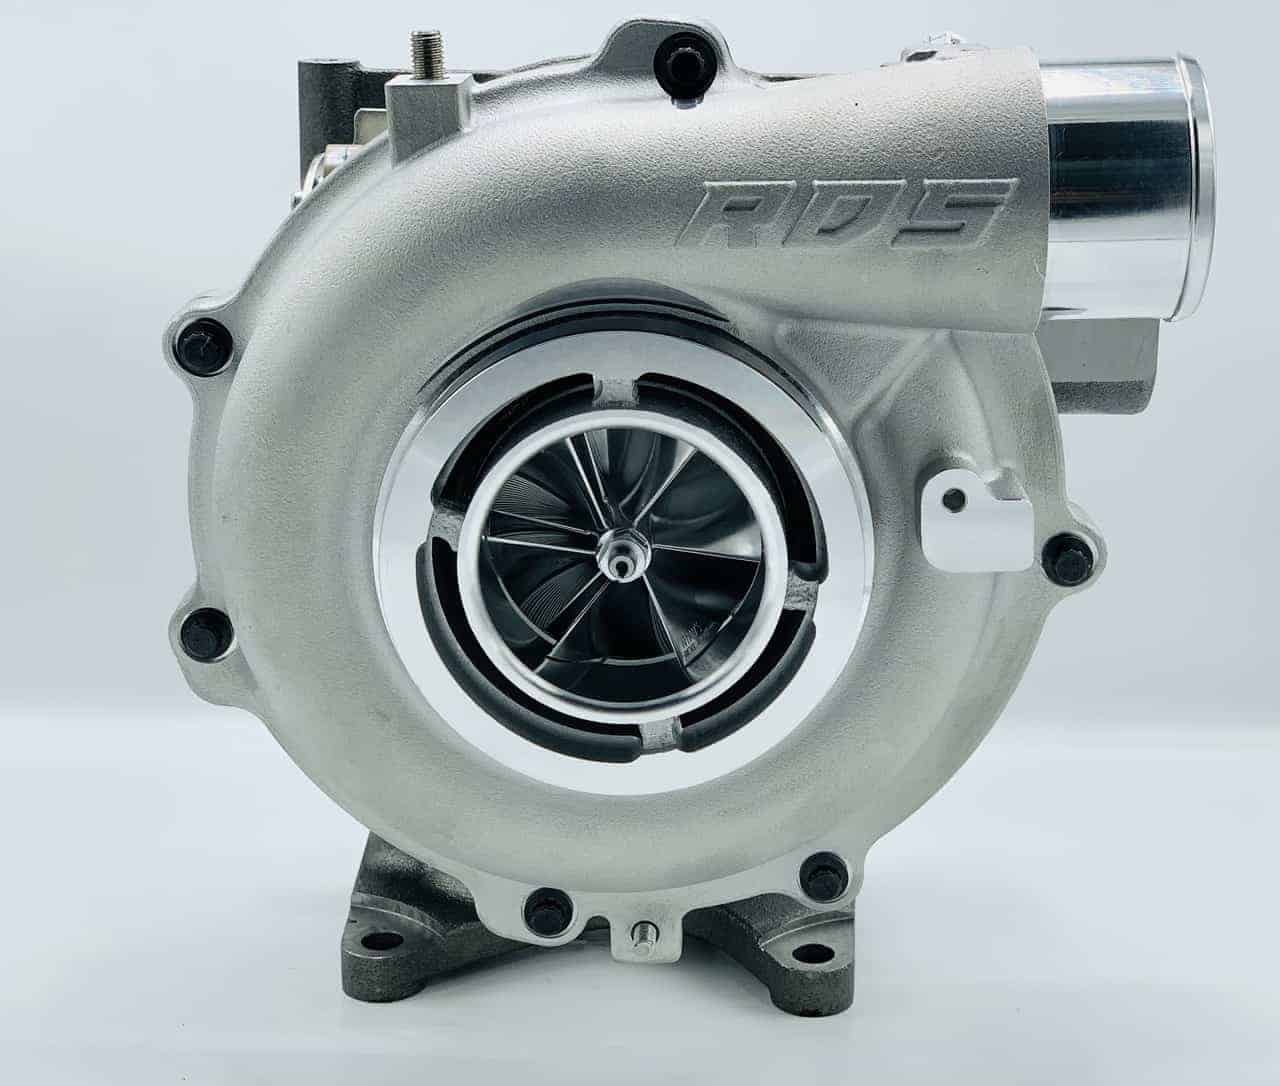 LML 11-16 Duramax Turbocharger Pro Stock Brand New Ryan's Diesel Service